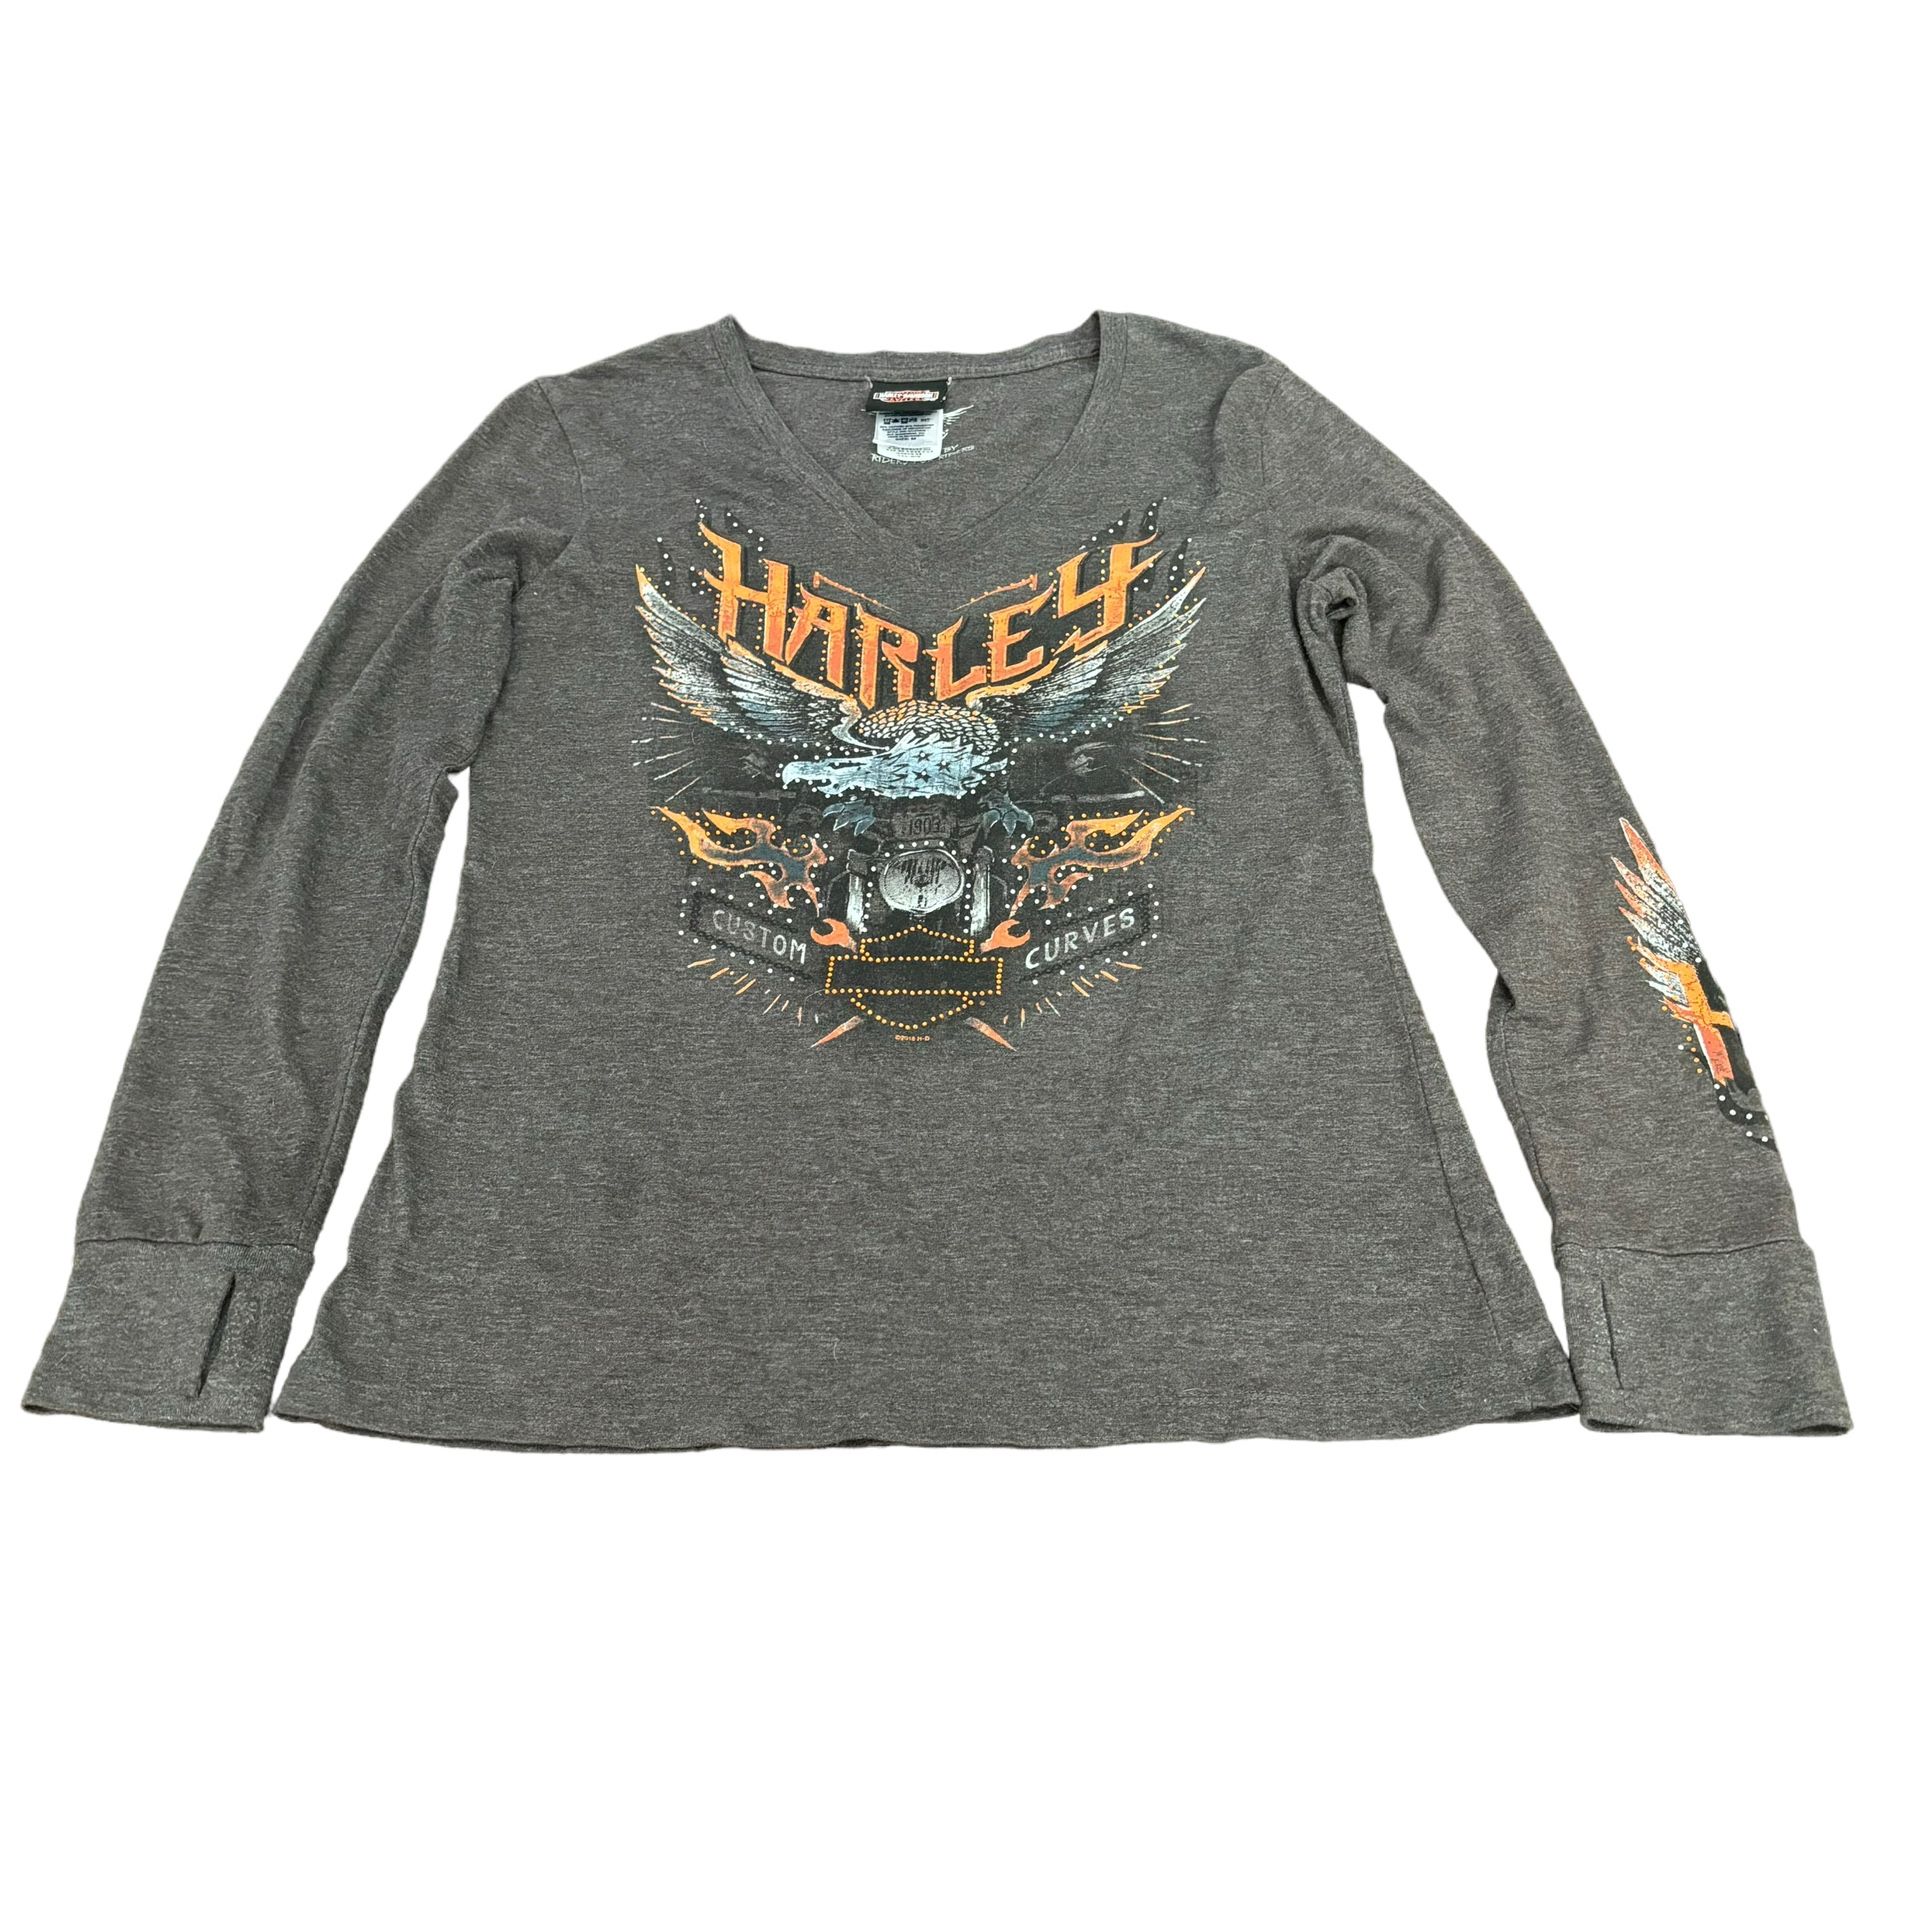 Harley Davidson Grey Women’s Long sleeve Shirt 